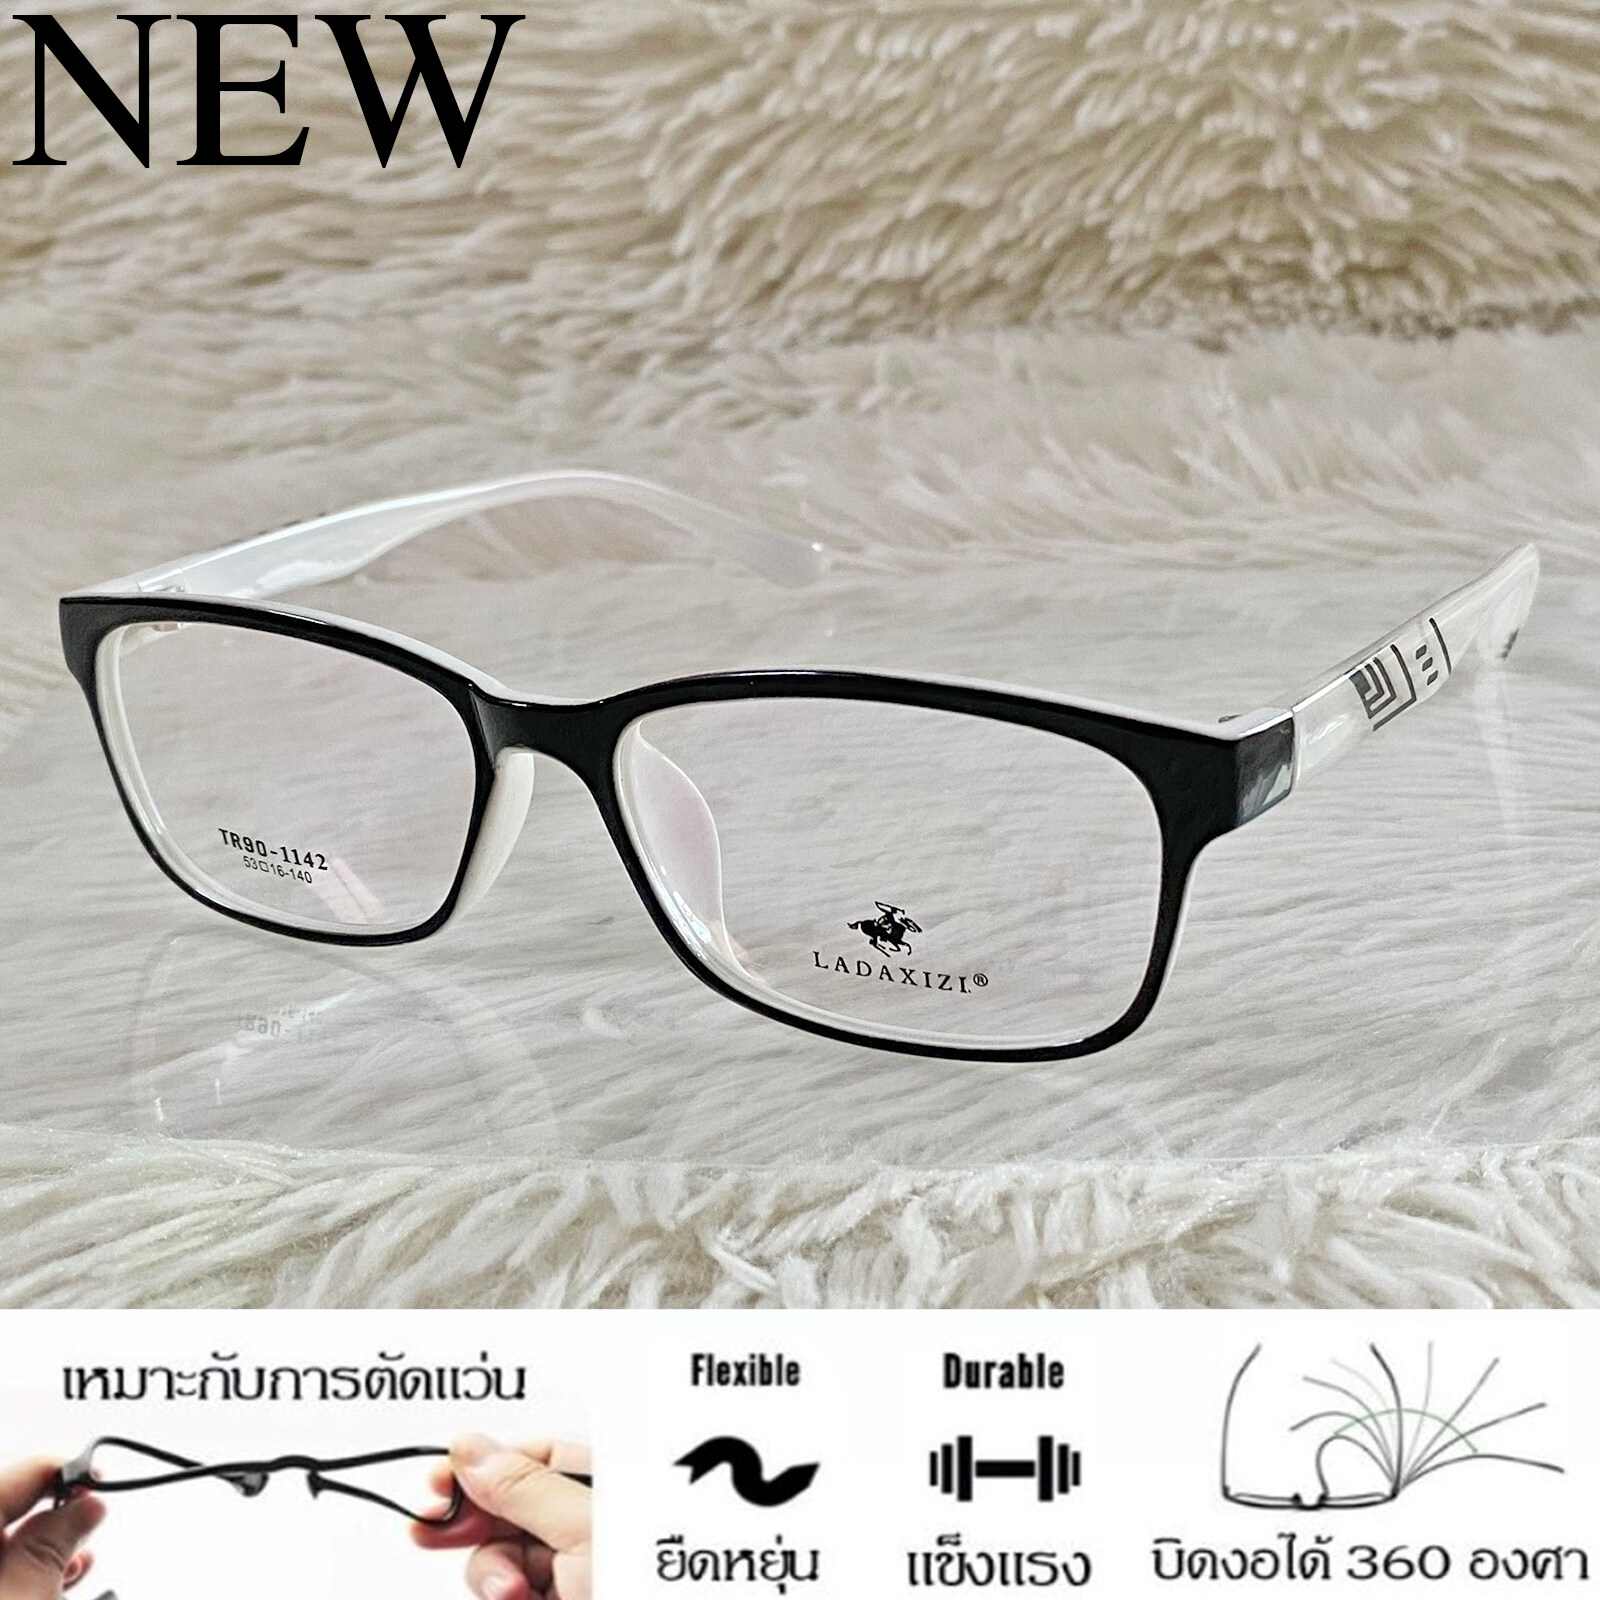 TR 90 กรอบแว่นตา สำหรับตัดเลนส์ แว่นตา Fashion ชาย-หญิง รุ่น LADAXIZI 11422 สีดำ กรอบเต็ม ทรงรี ขาข้อต่อ ทนความร้อนสูง รับตัดเลนส์ ทุกชนิด